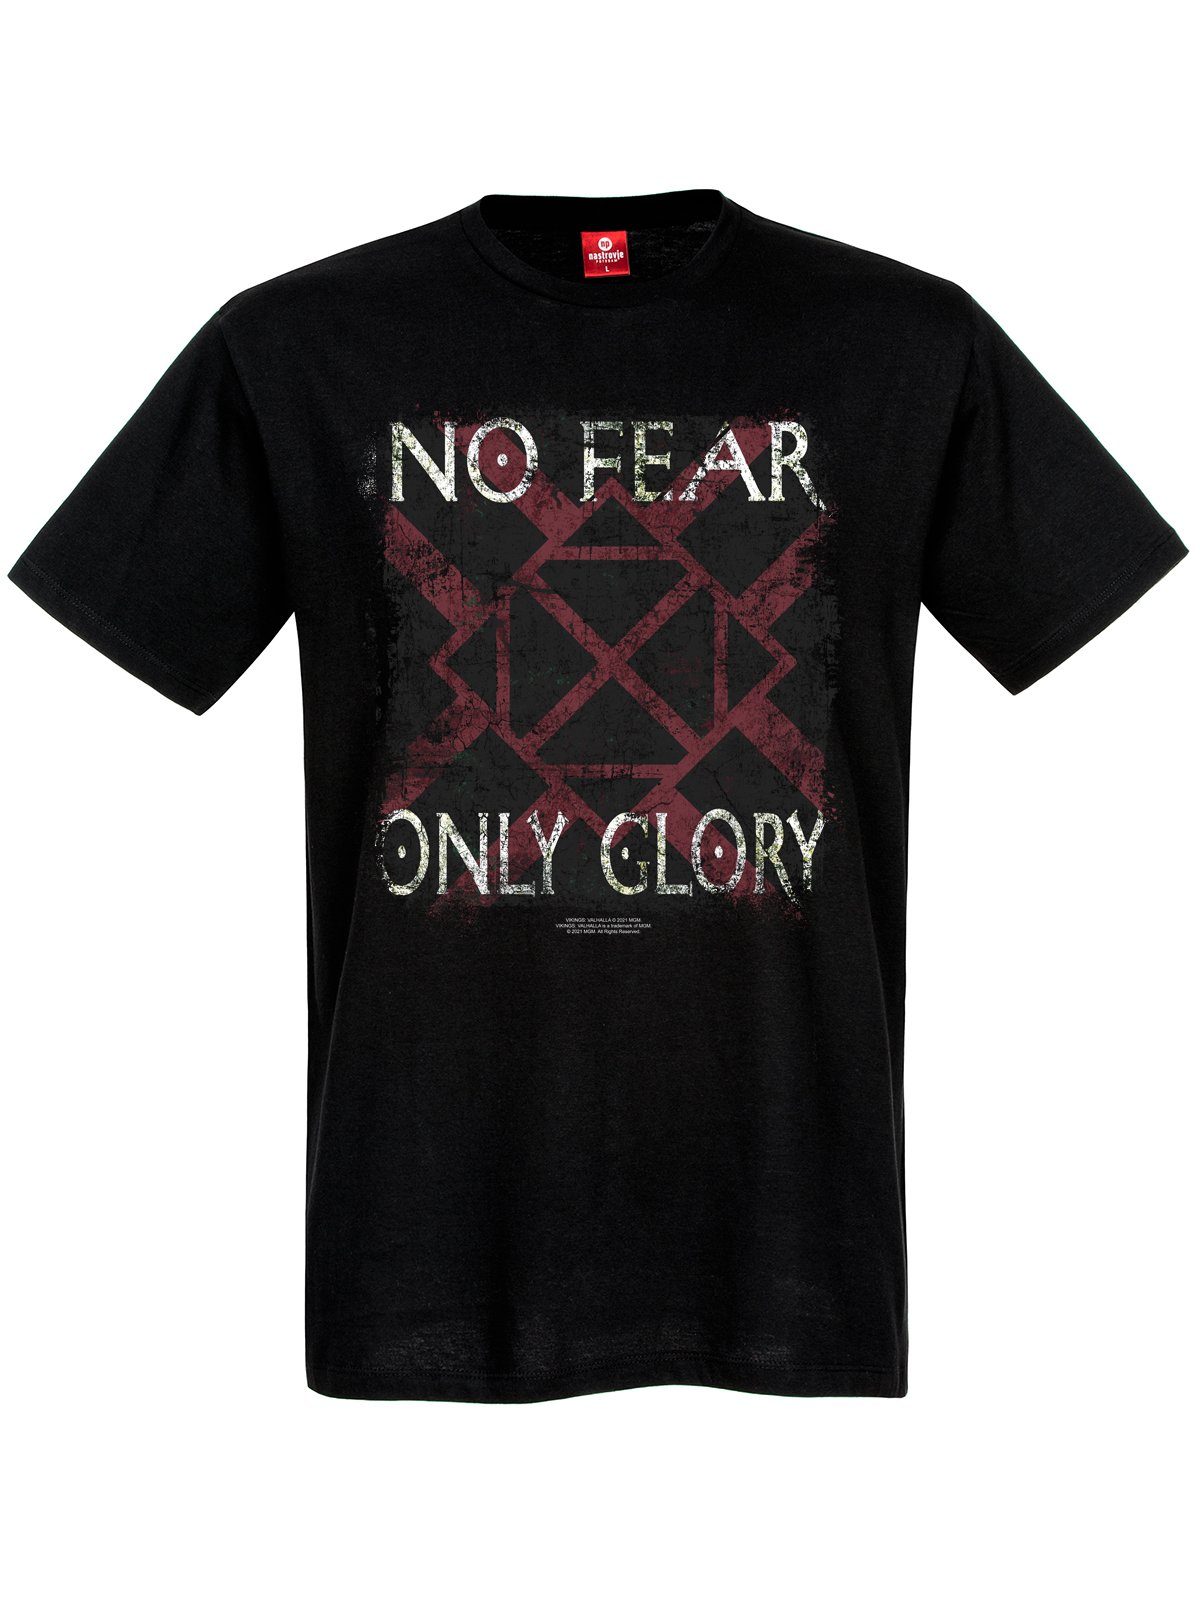 Nastrovje Potsdam T-Shirt Vikings Valhalla No fear only glory